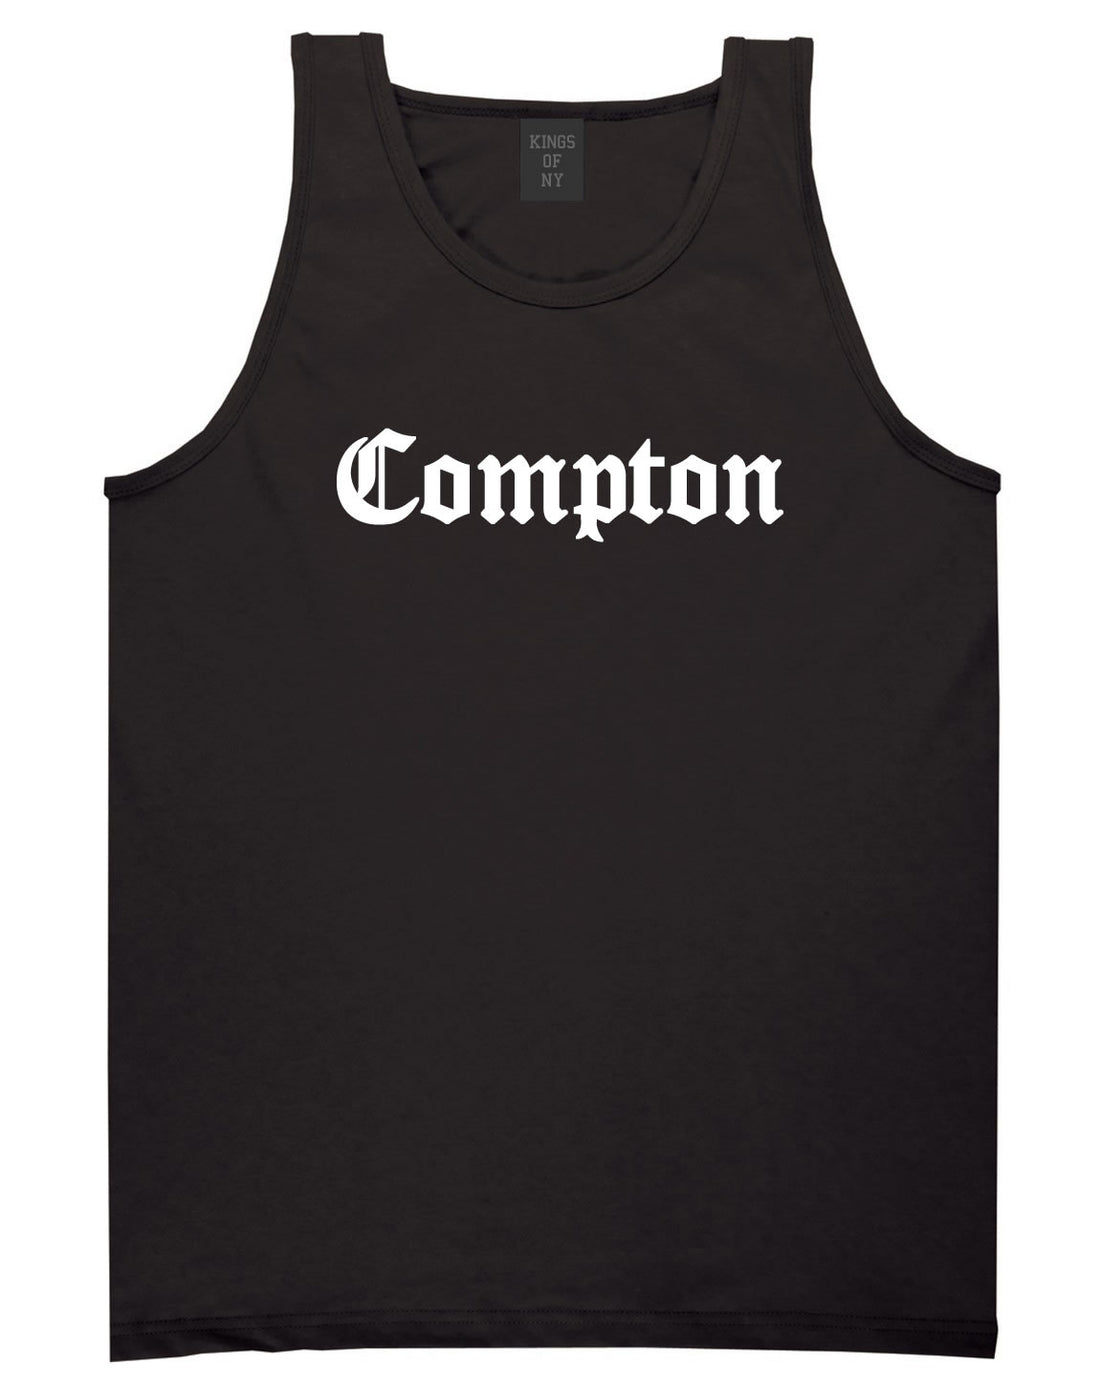 Kings Of NY Compton Tank Top in Black